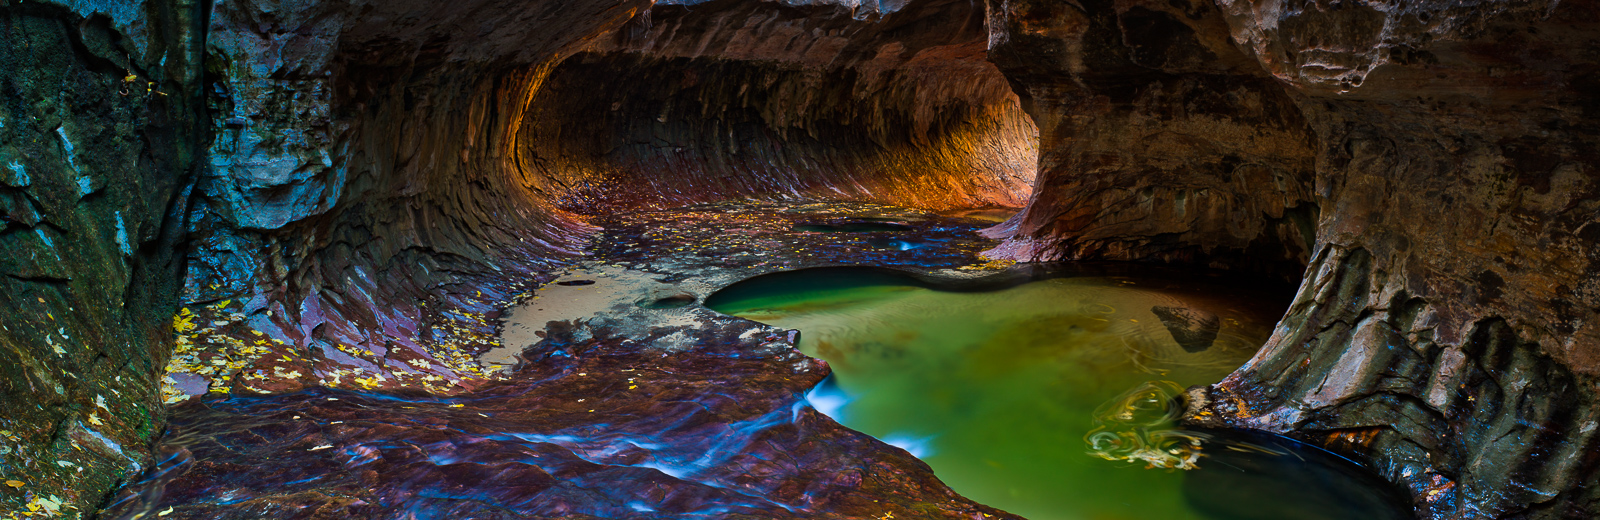 The Magic Cavern, Ancient, Desert, Horizontal, Panoramic, Zion National Park, landscape, river, brown, red, green, aqua, yellow...